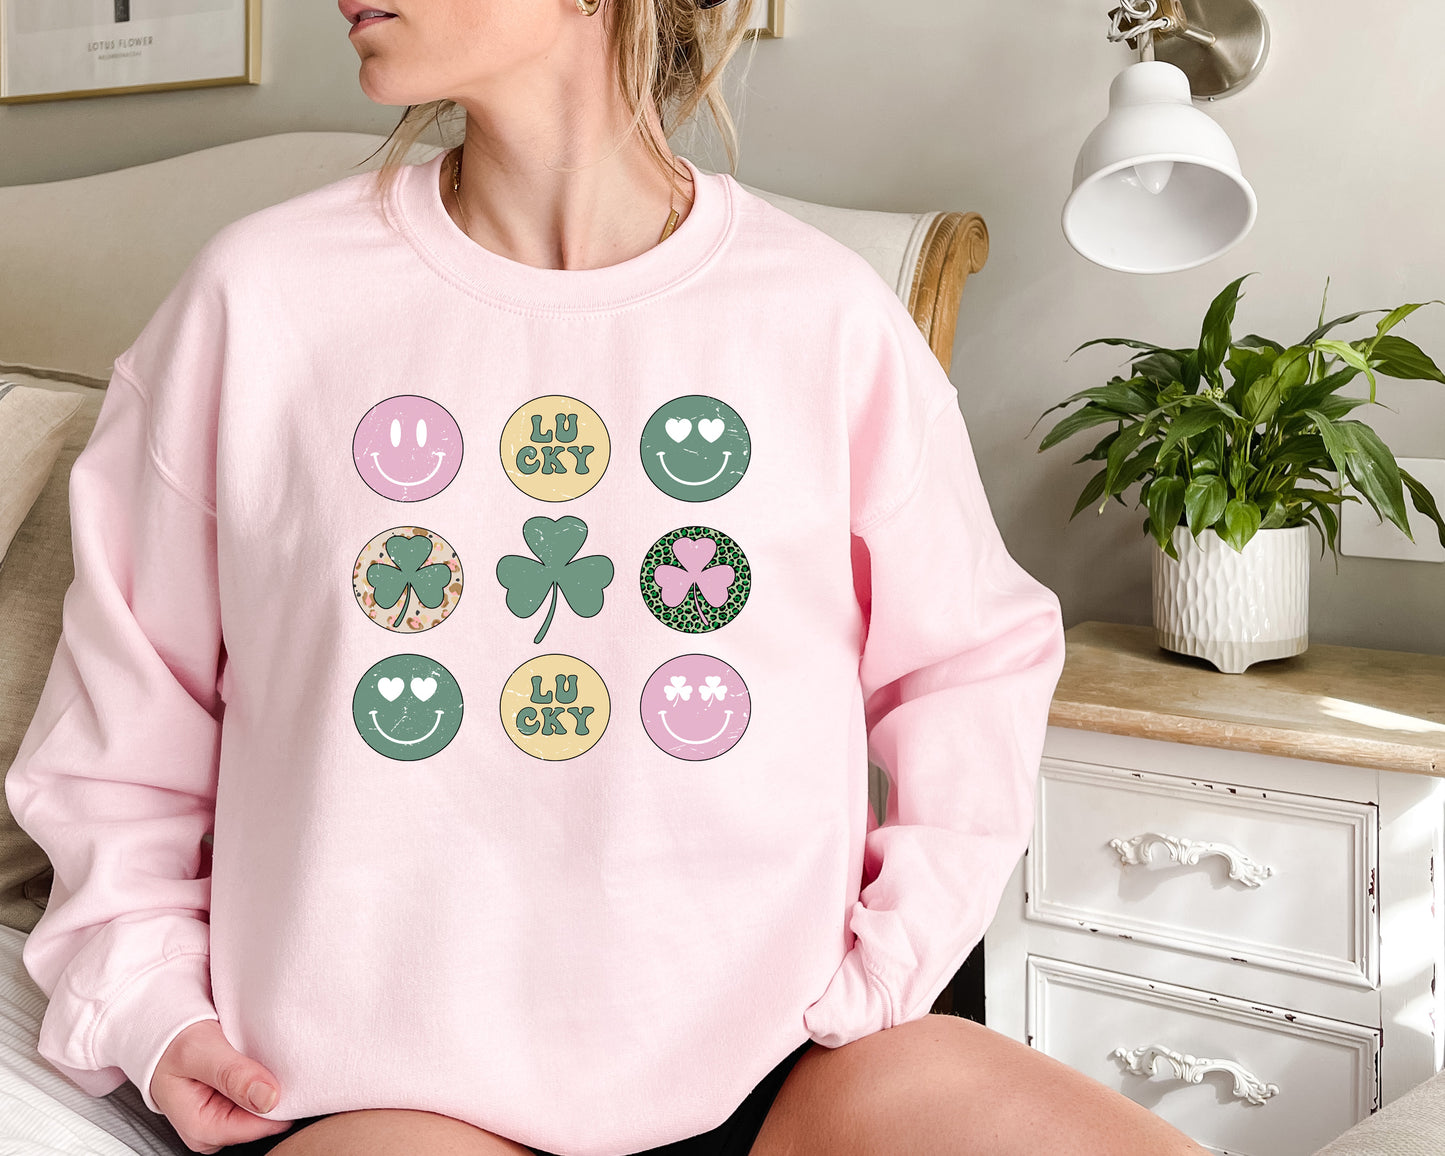 St. Patrick's Day Sweatshirt /  Groovy Smiley design sweatshirt / shamrock design sweatshirt crewneck